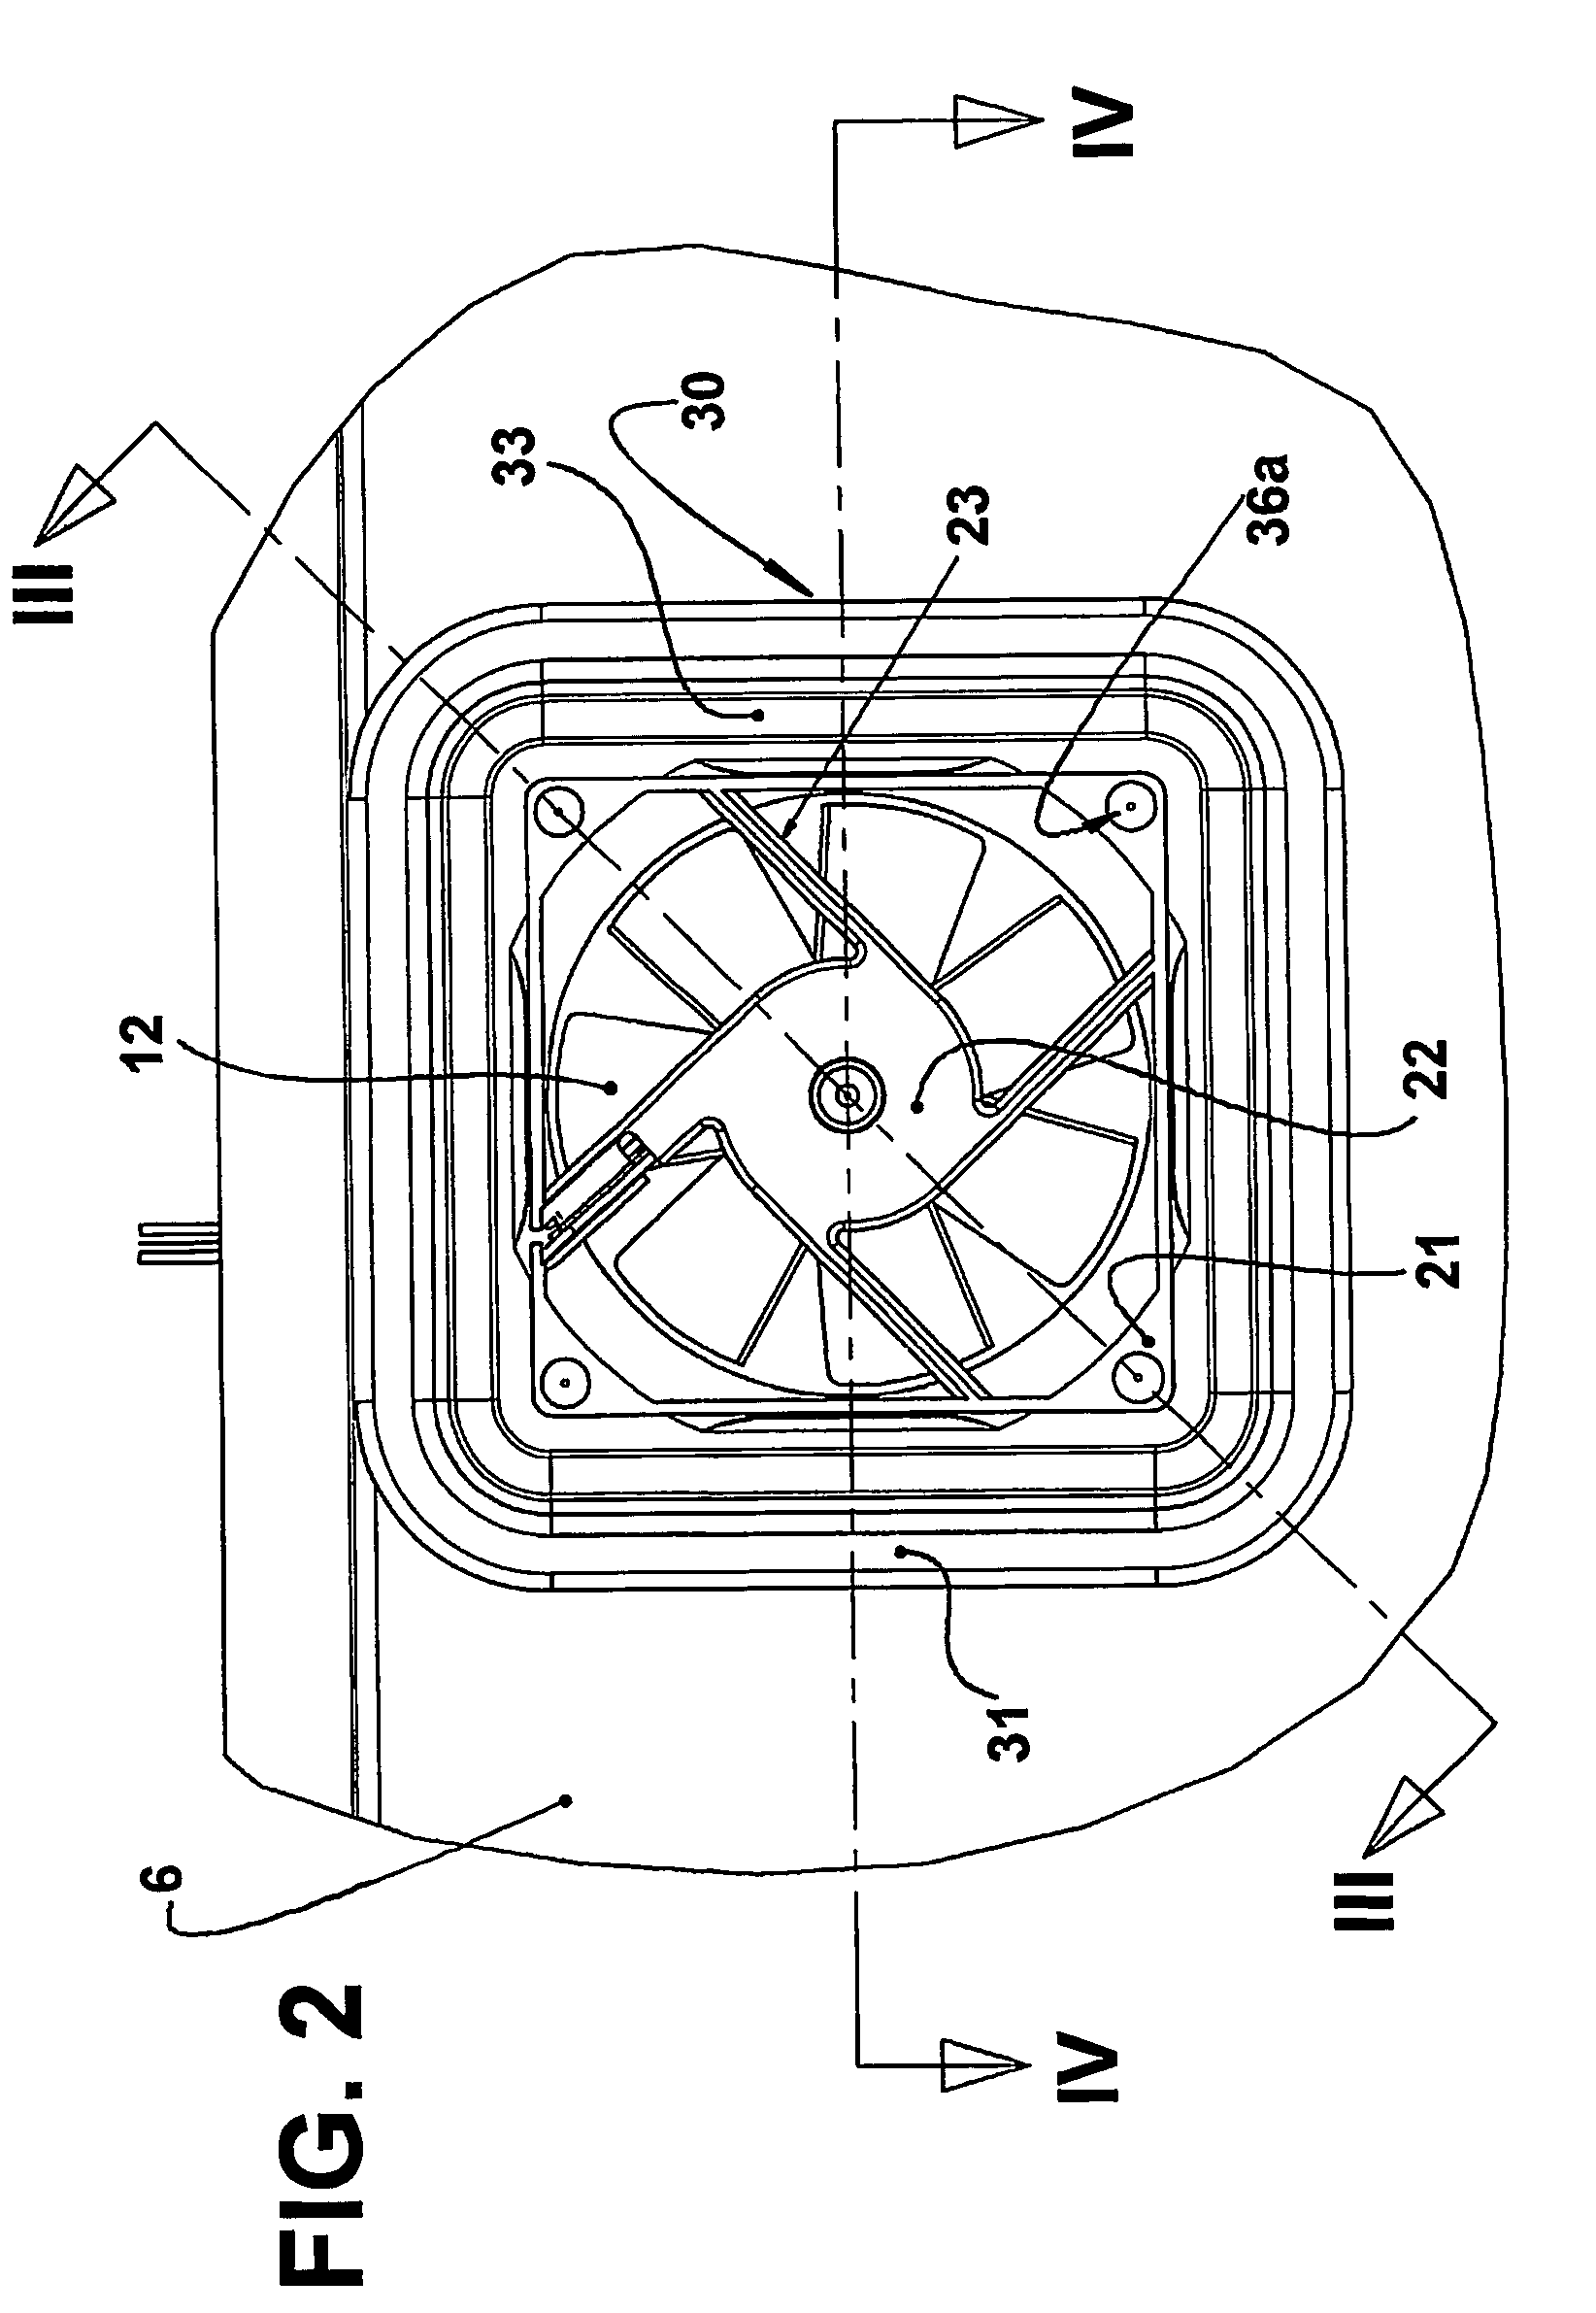 Mounting arrangement for a refrigerator fan